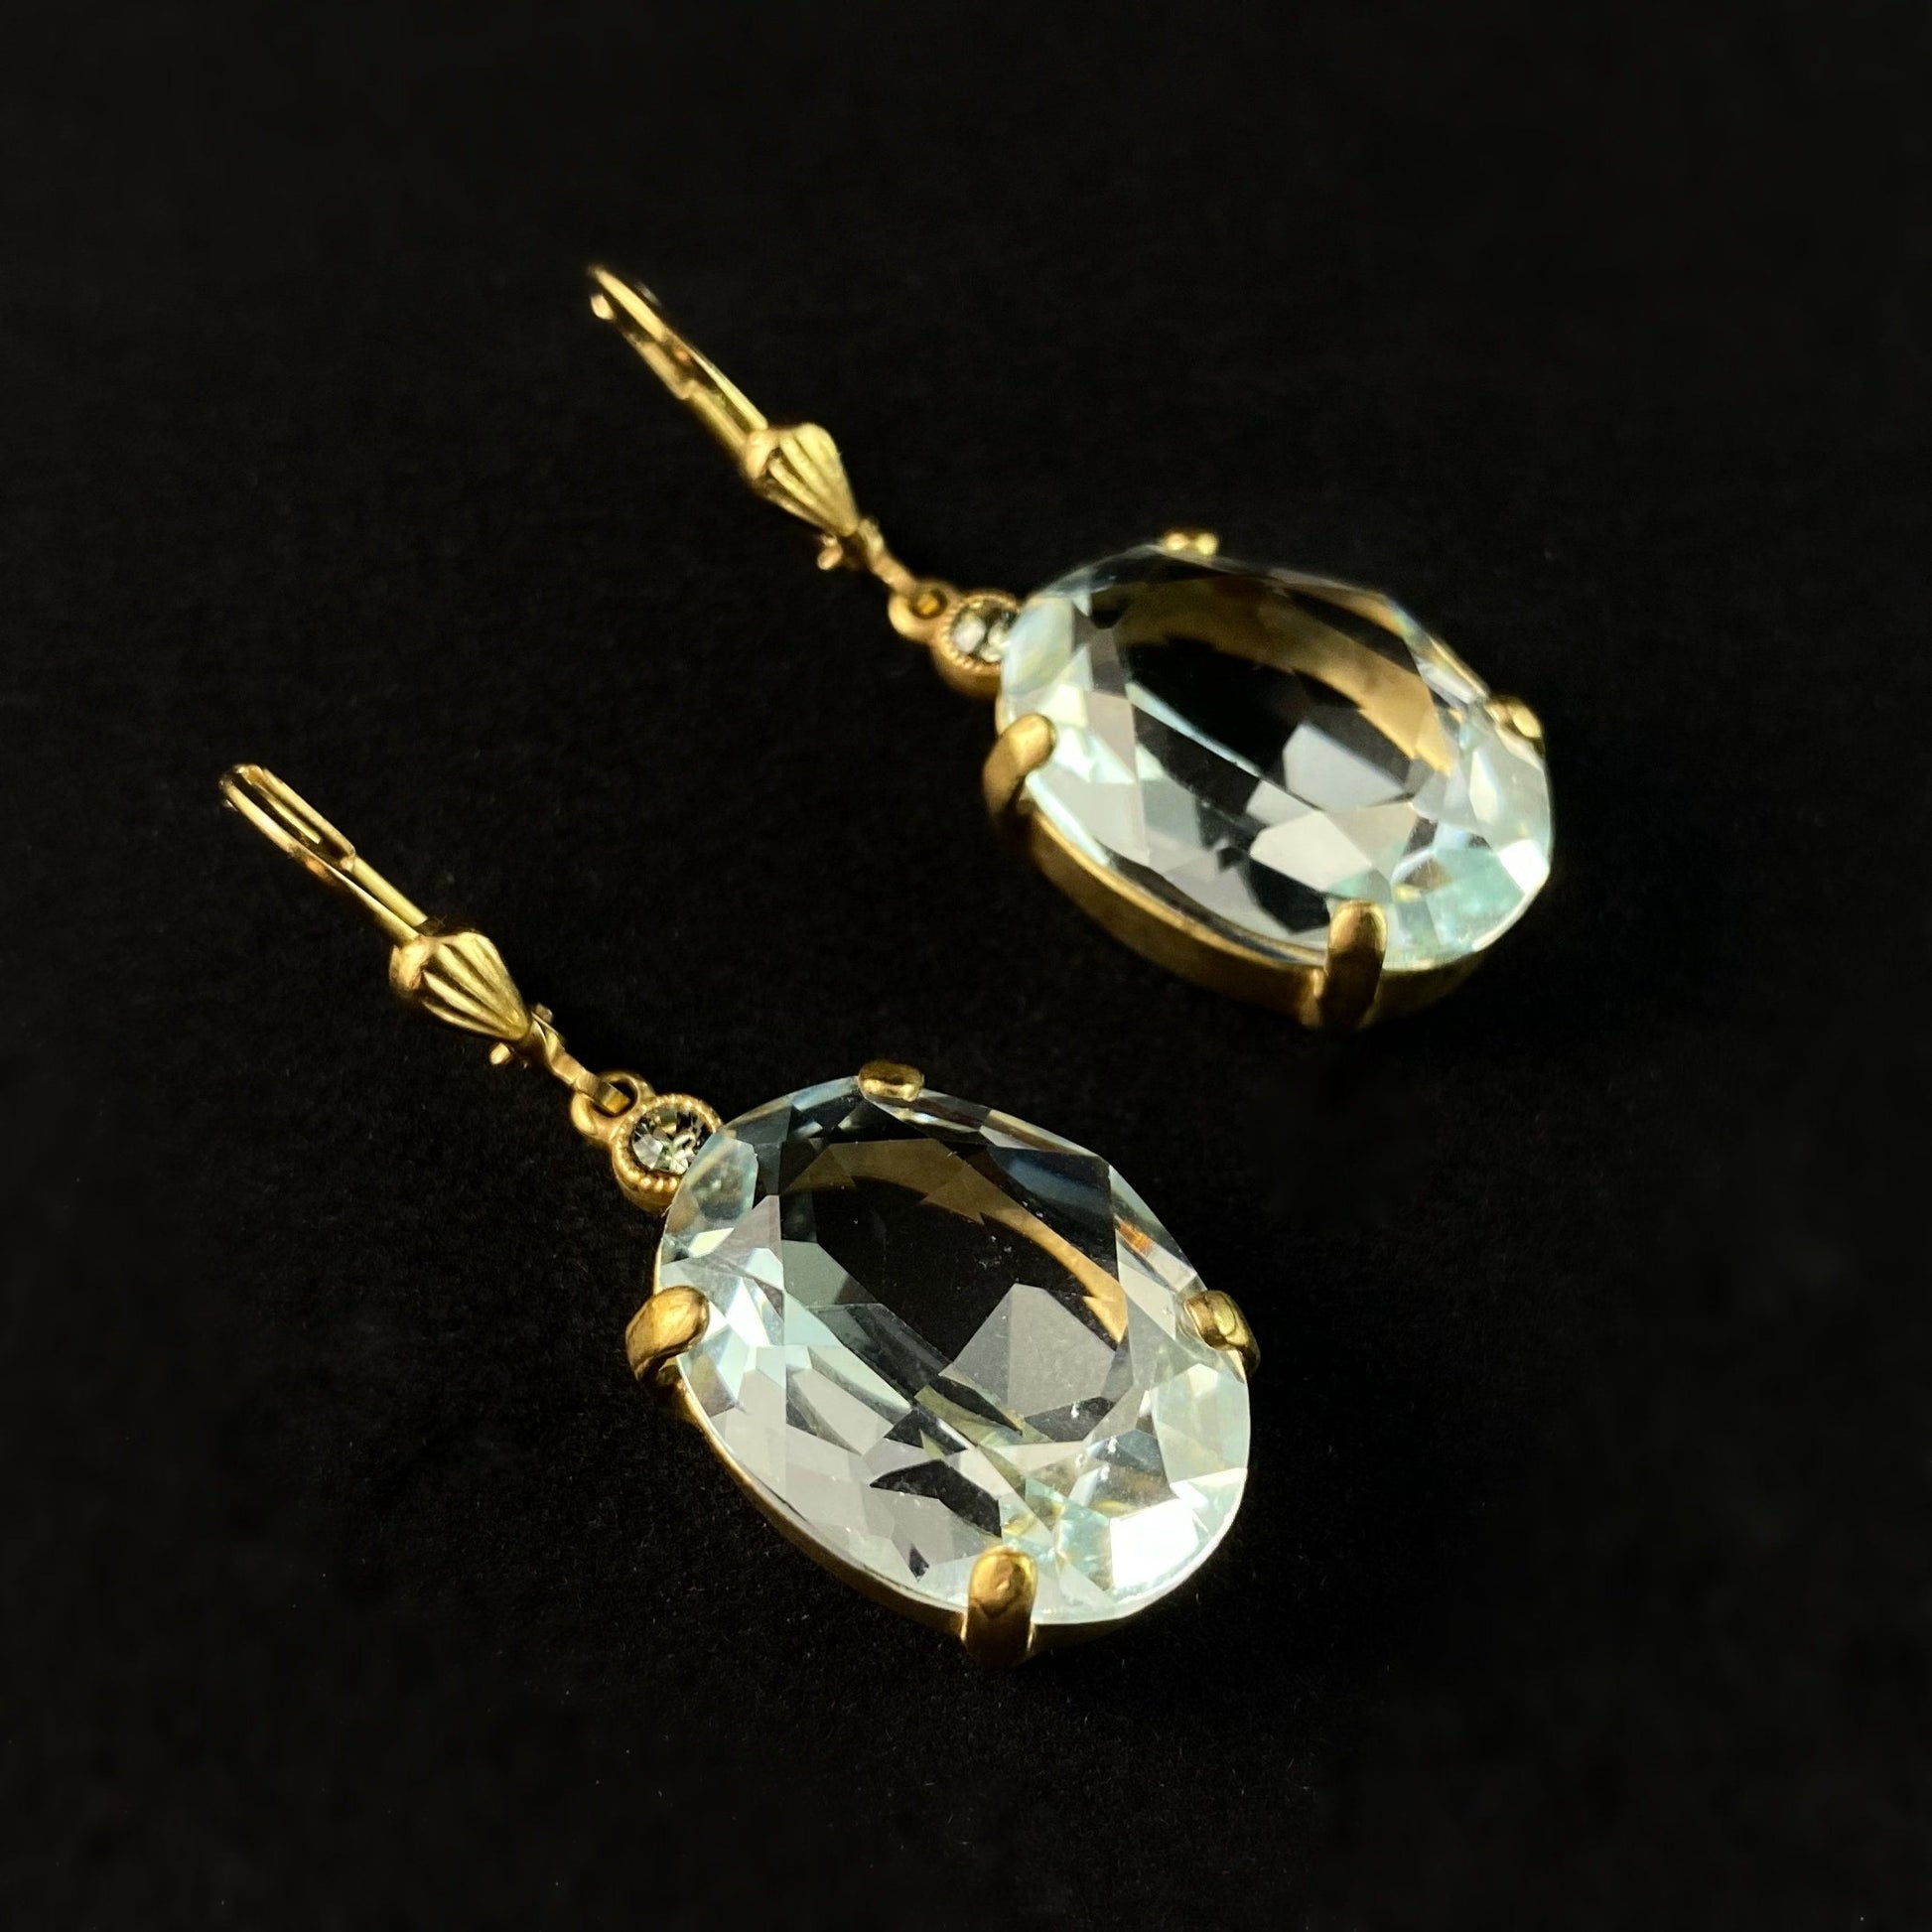 Oval Cut Swarovski Crystal Drop Earrings, Light Blue - La Vie Parisienne by Catherine Popesco